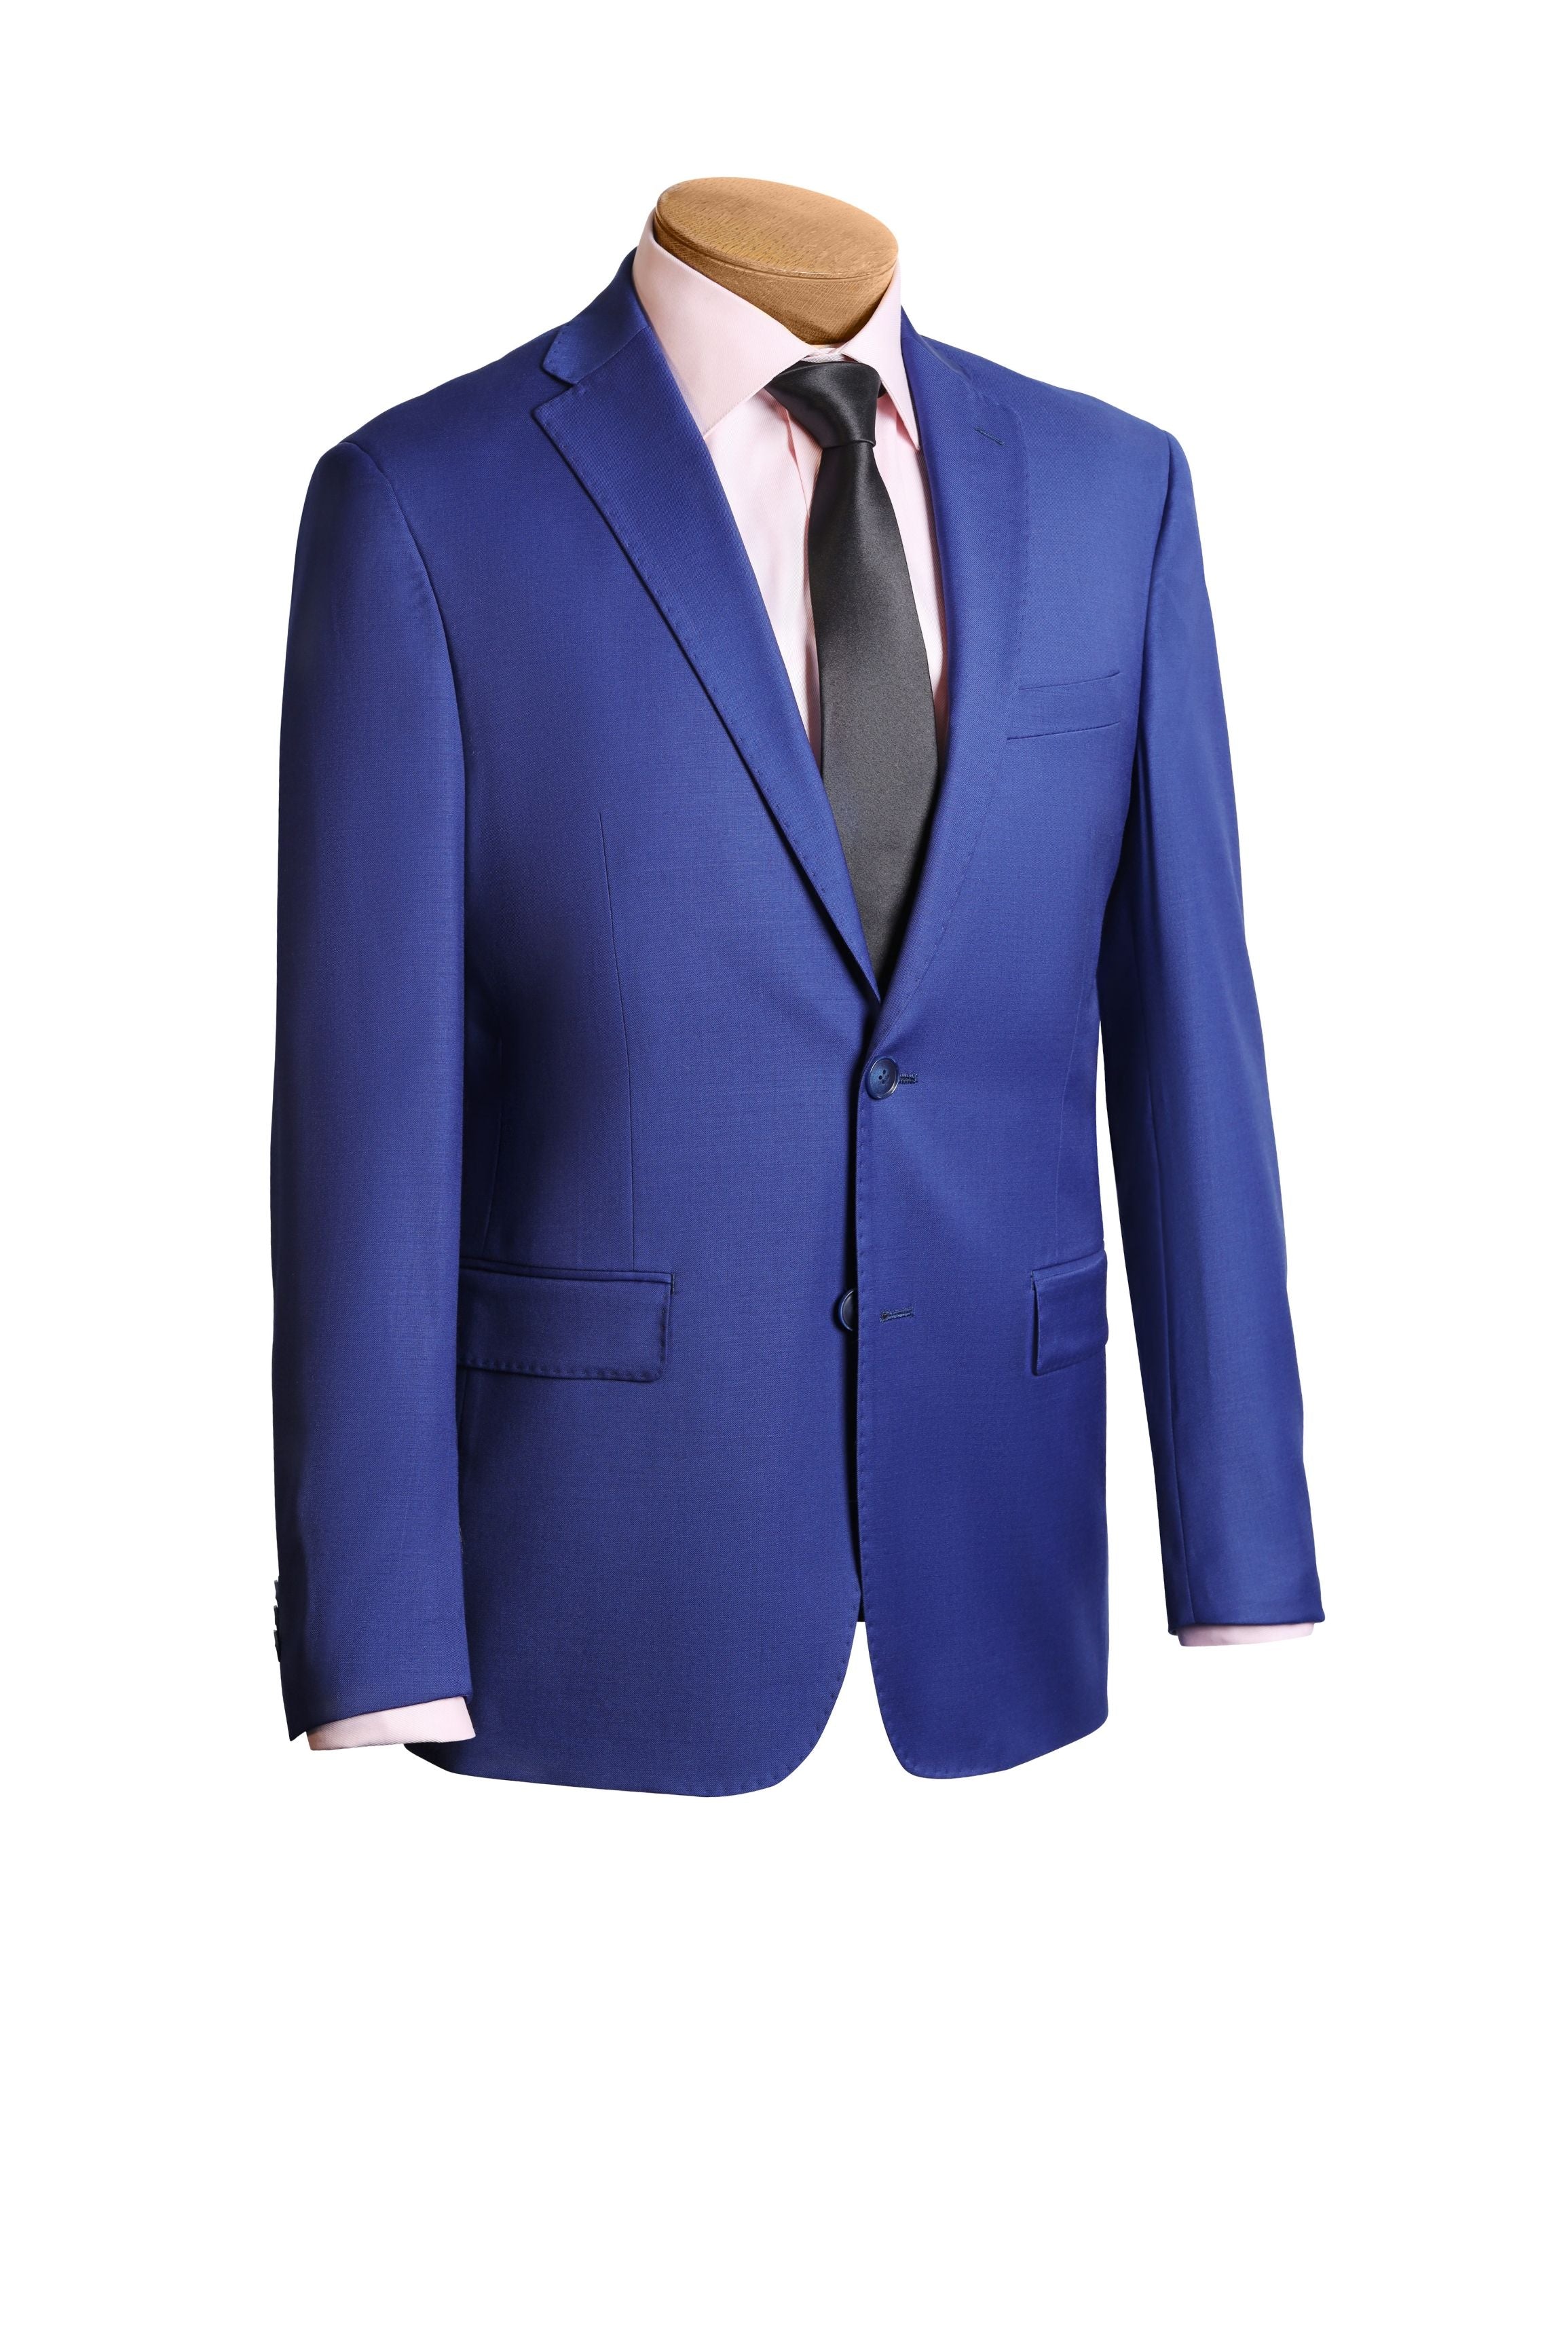 Lazarou Light Blue Modern Suit - Mastroianni Fashions